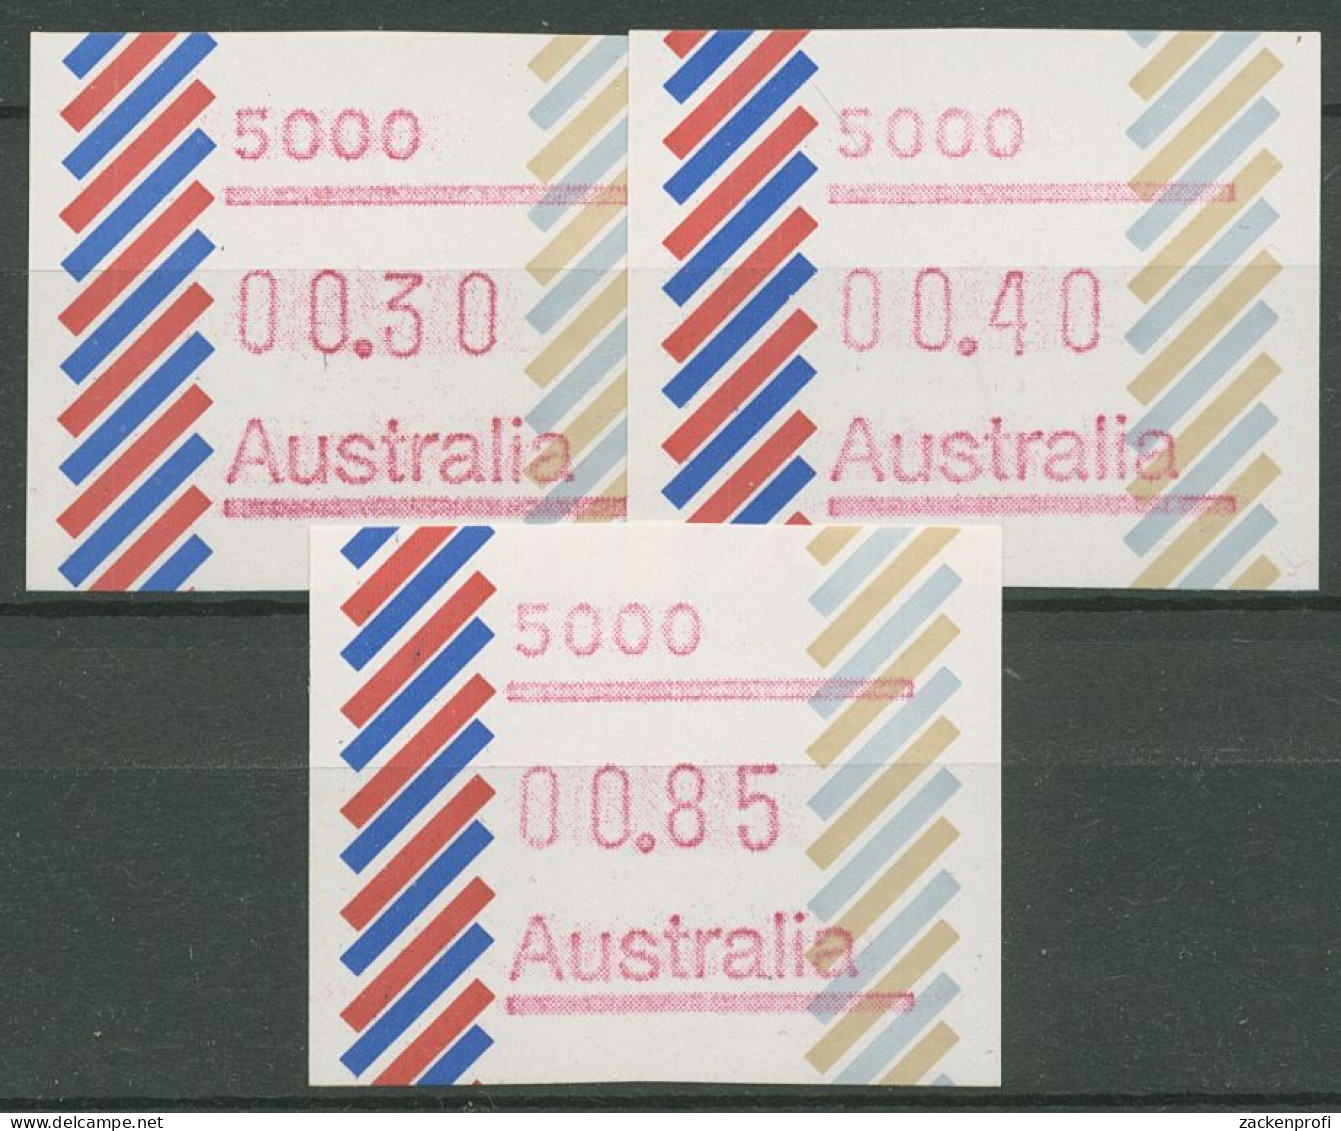 Australien 1984 Balken Tastensatz Automatenmarke 1 S1, 5000 Postfrisch - Timbres De Distributeurs [ATM]